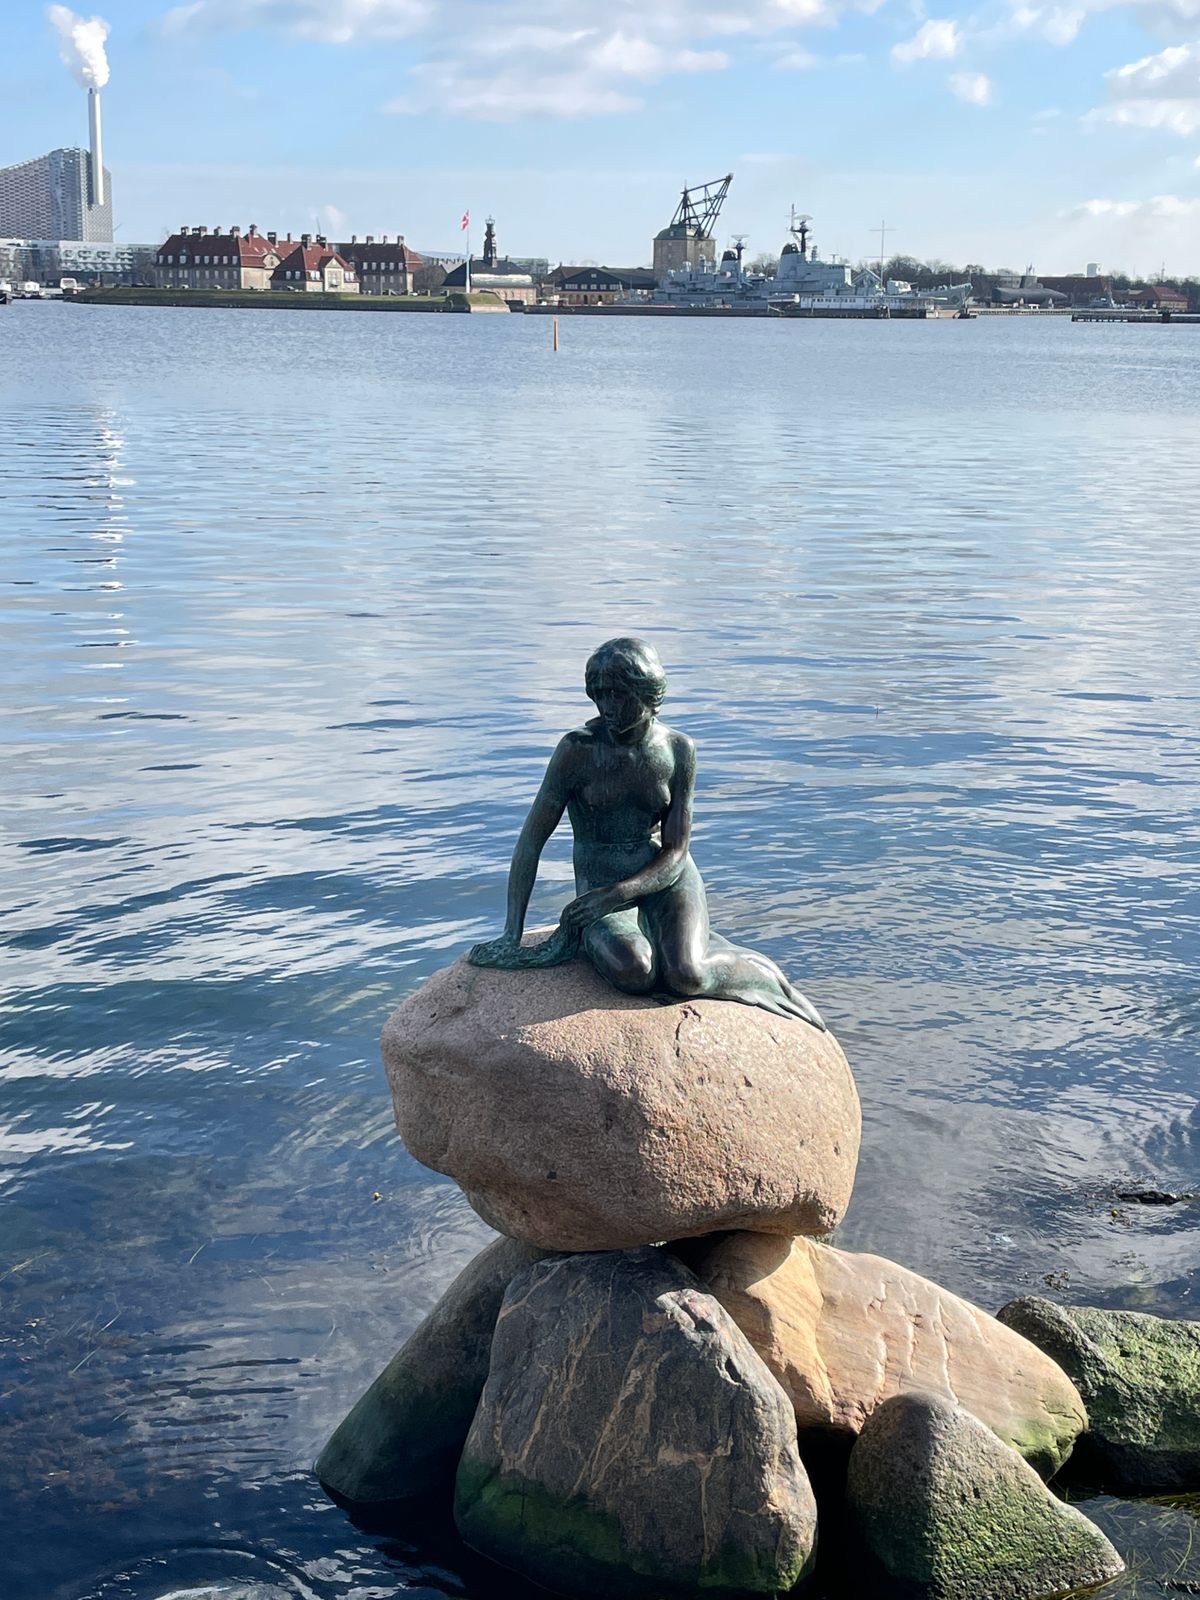 The Little Mermaid – Copenhagen, Denmark - Atlas Obscura